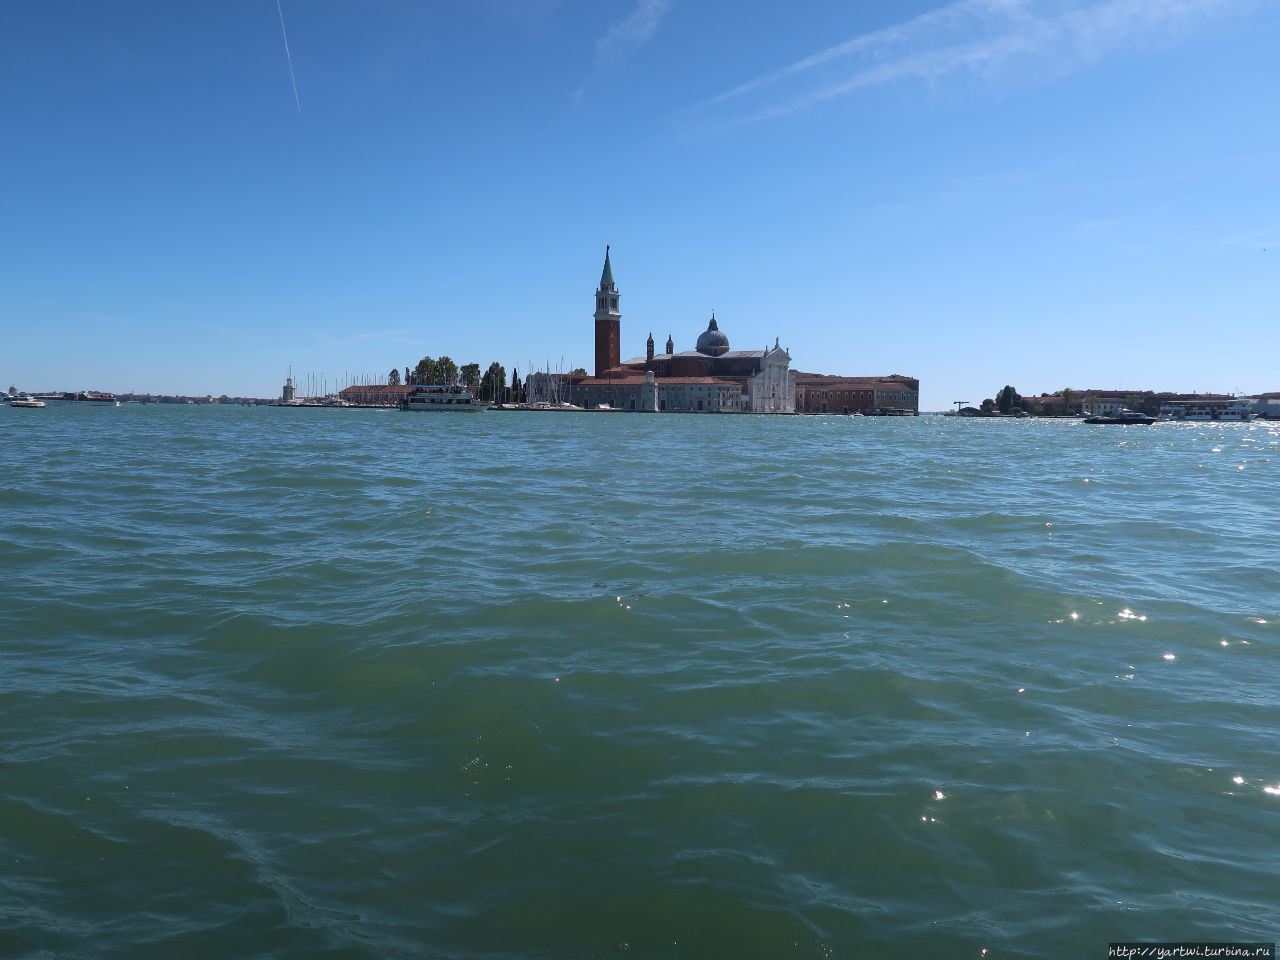 Собираемся на причале и возвращаемся:  совершаем морскую прогулку по Венецианскому заливу. Венеция, Италия